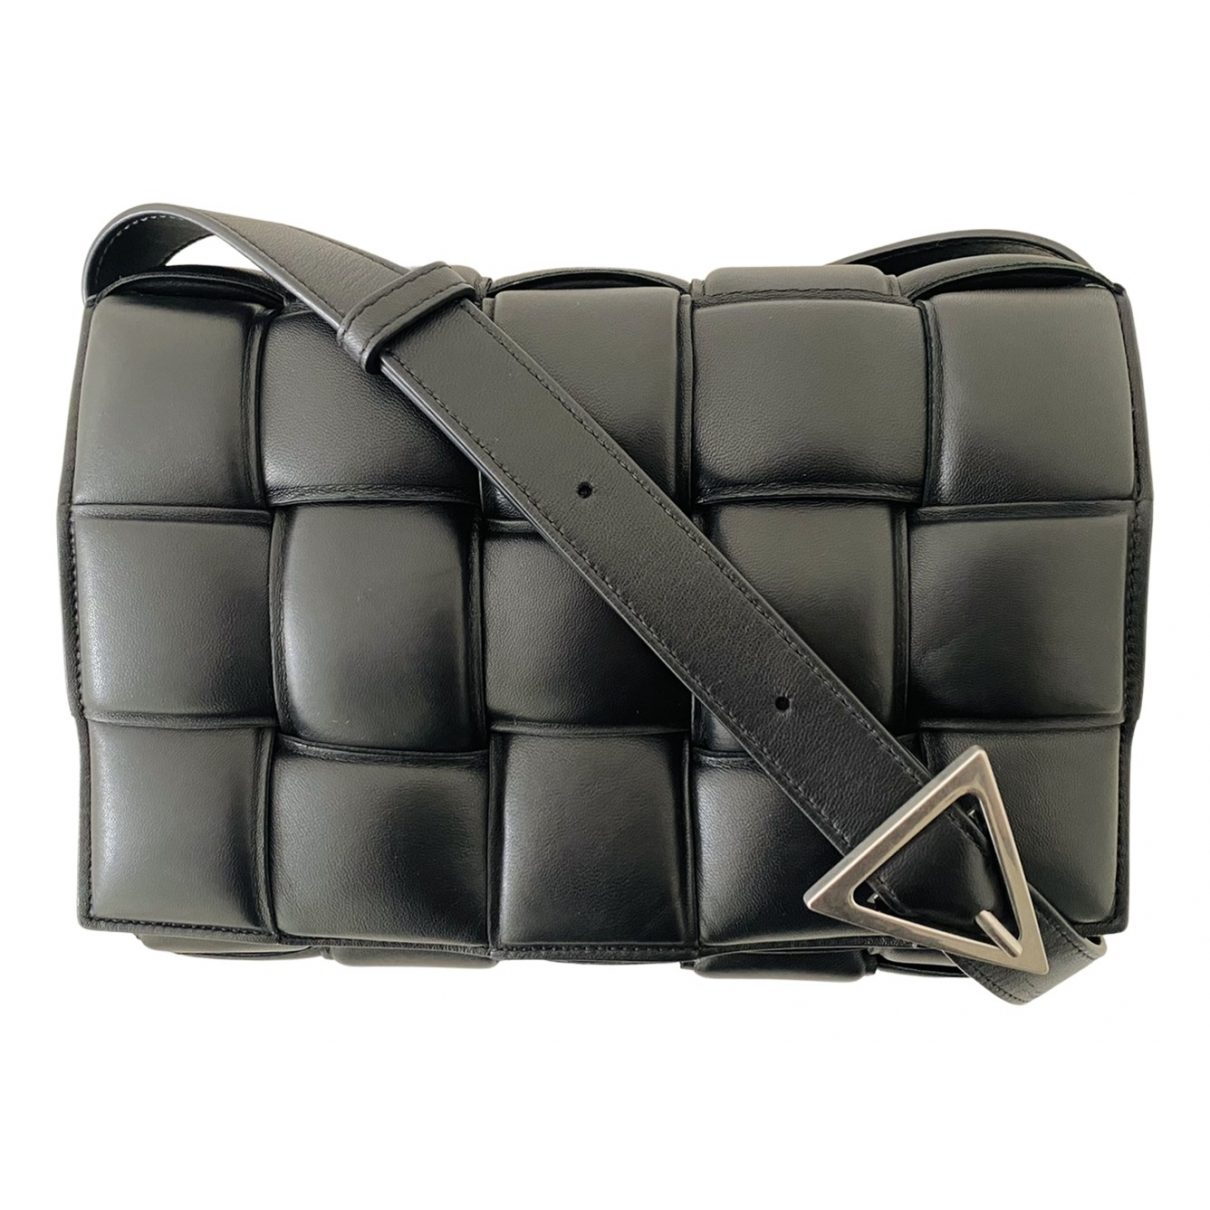 Cassette Sale Special Price Philadelphia Mall Padded leather crossbody bag